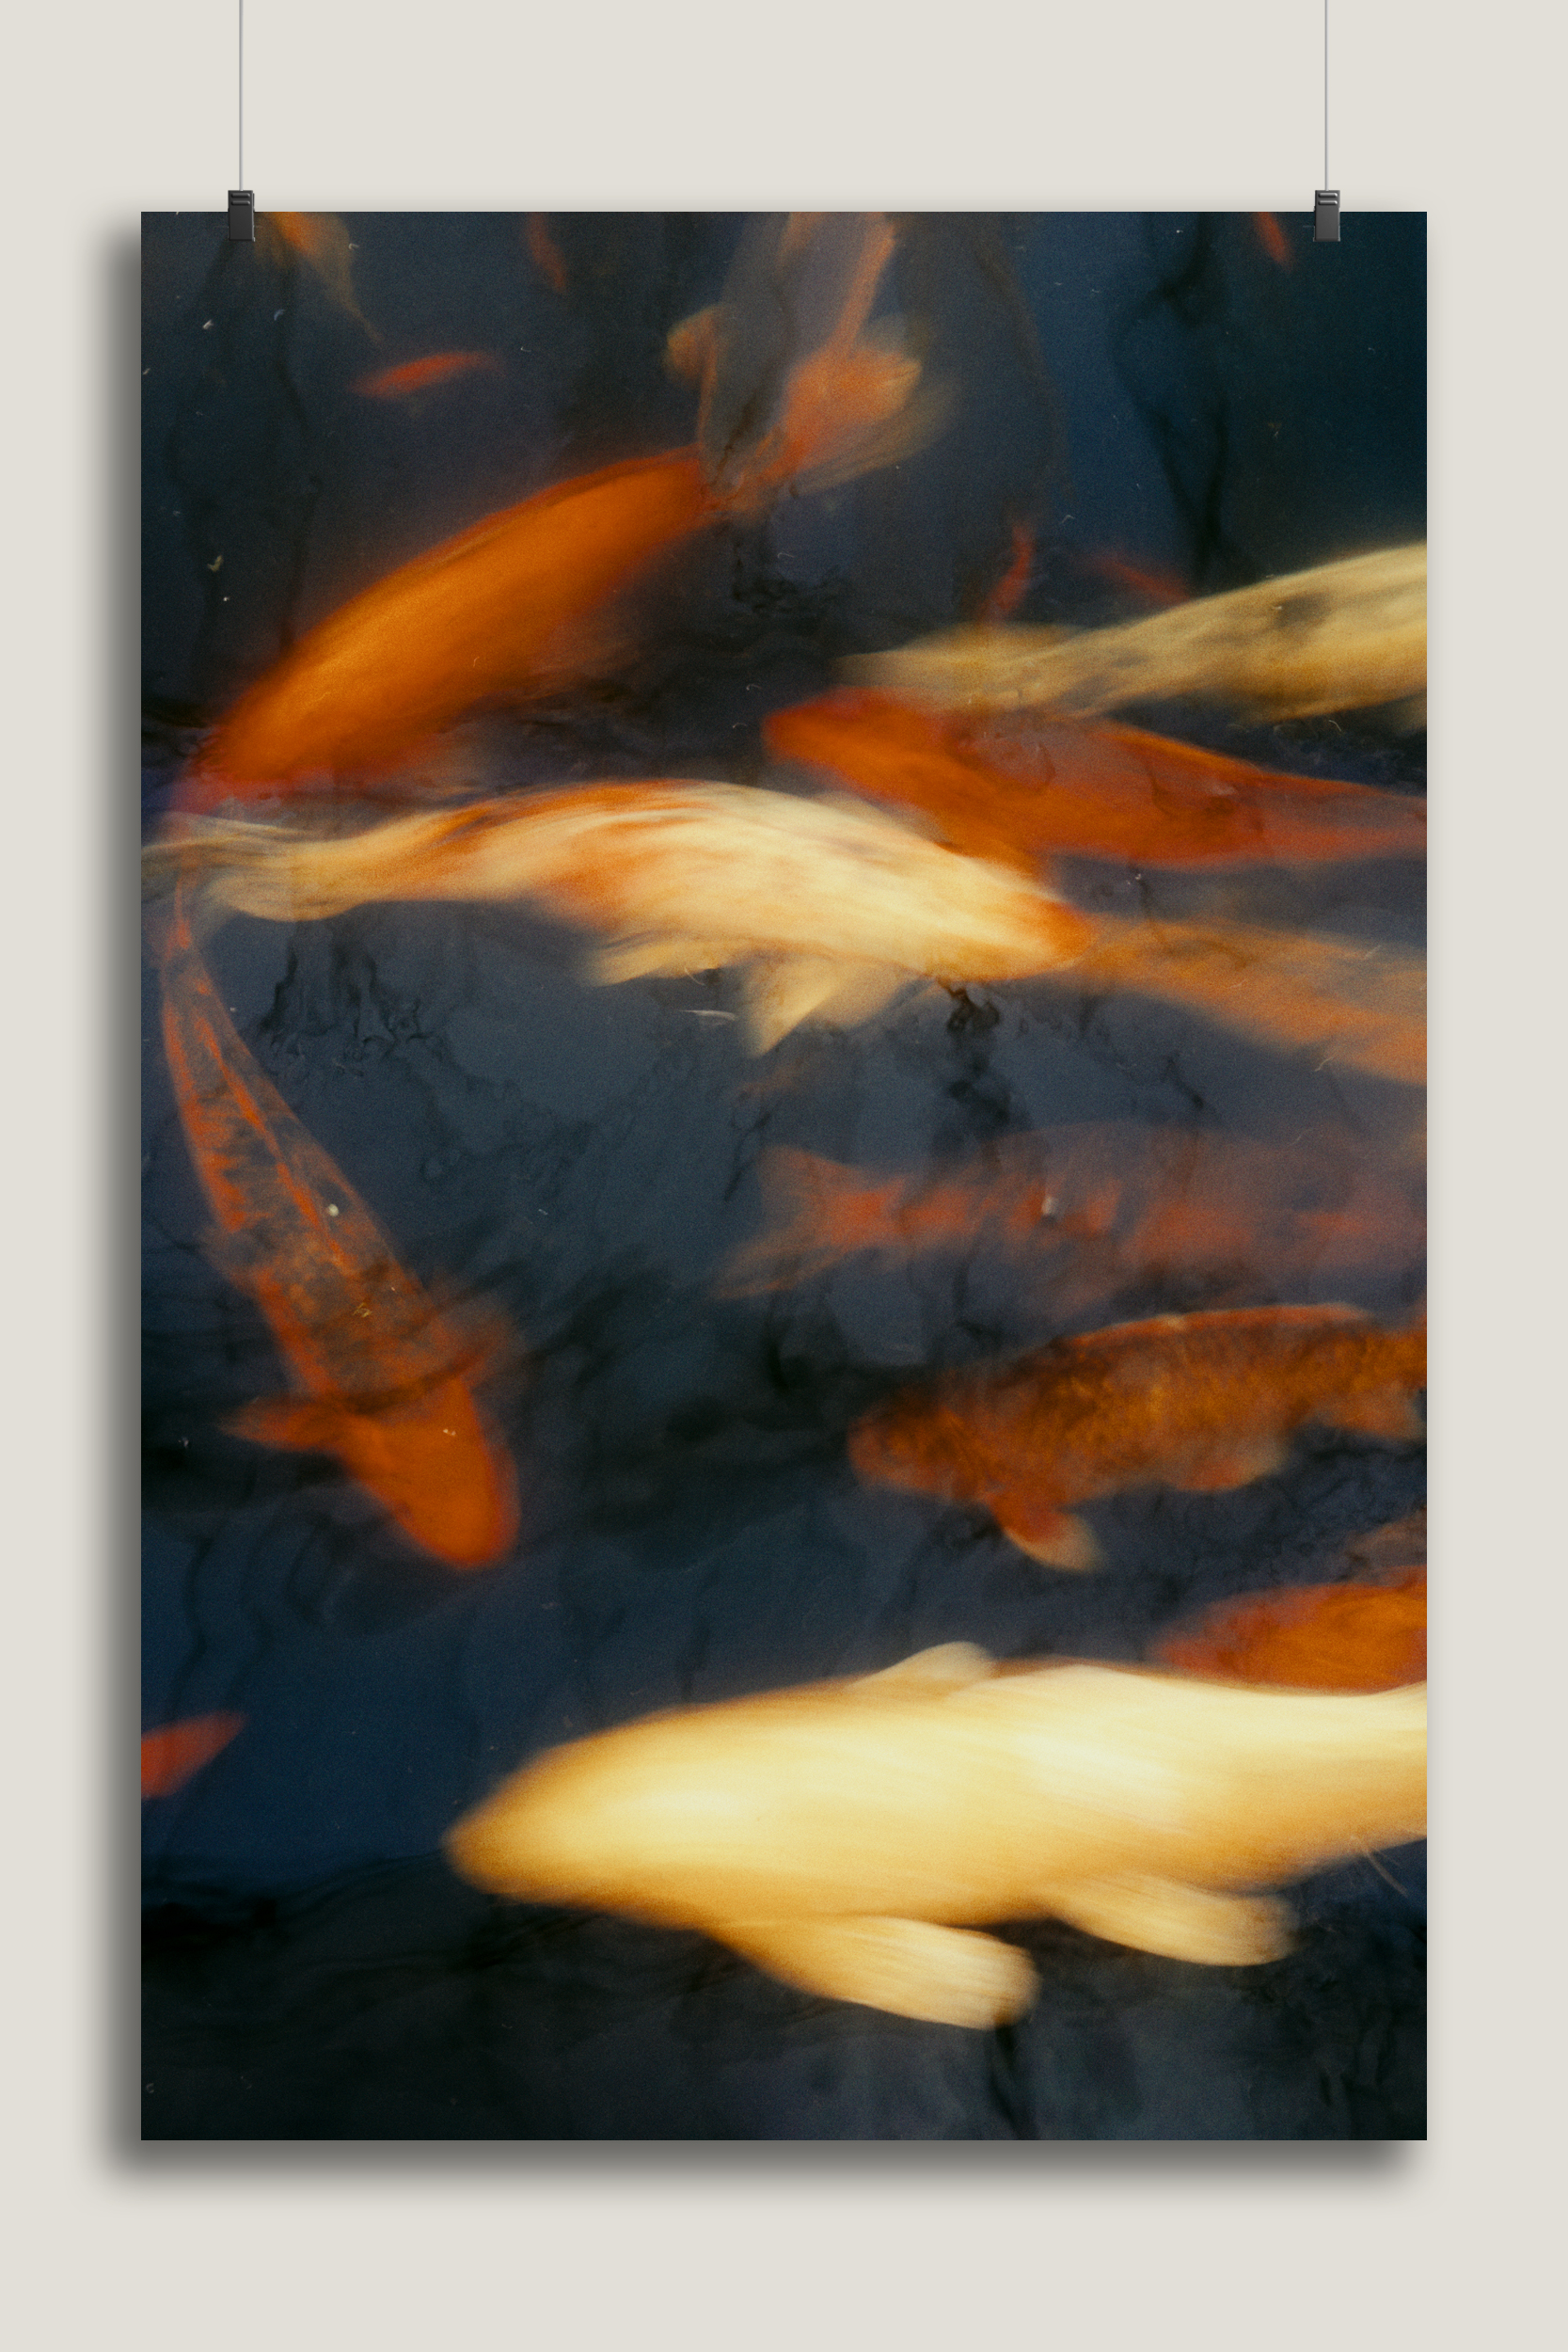 Poster of a vibrant Koi Pond